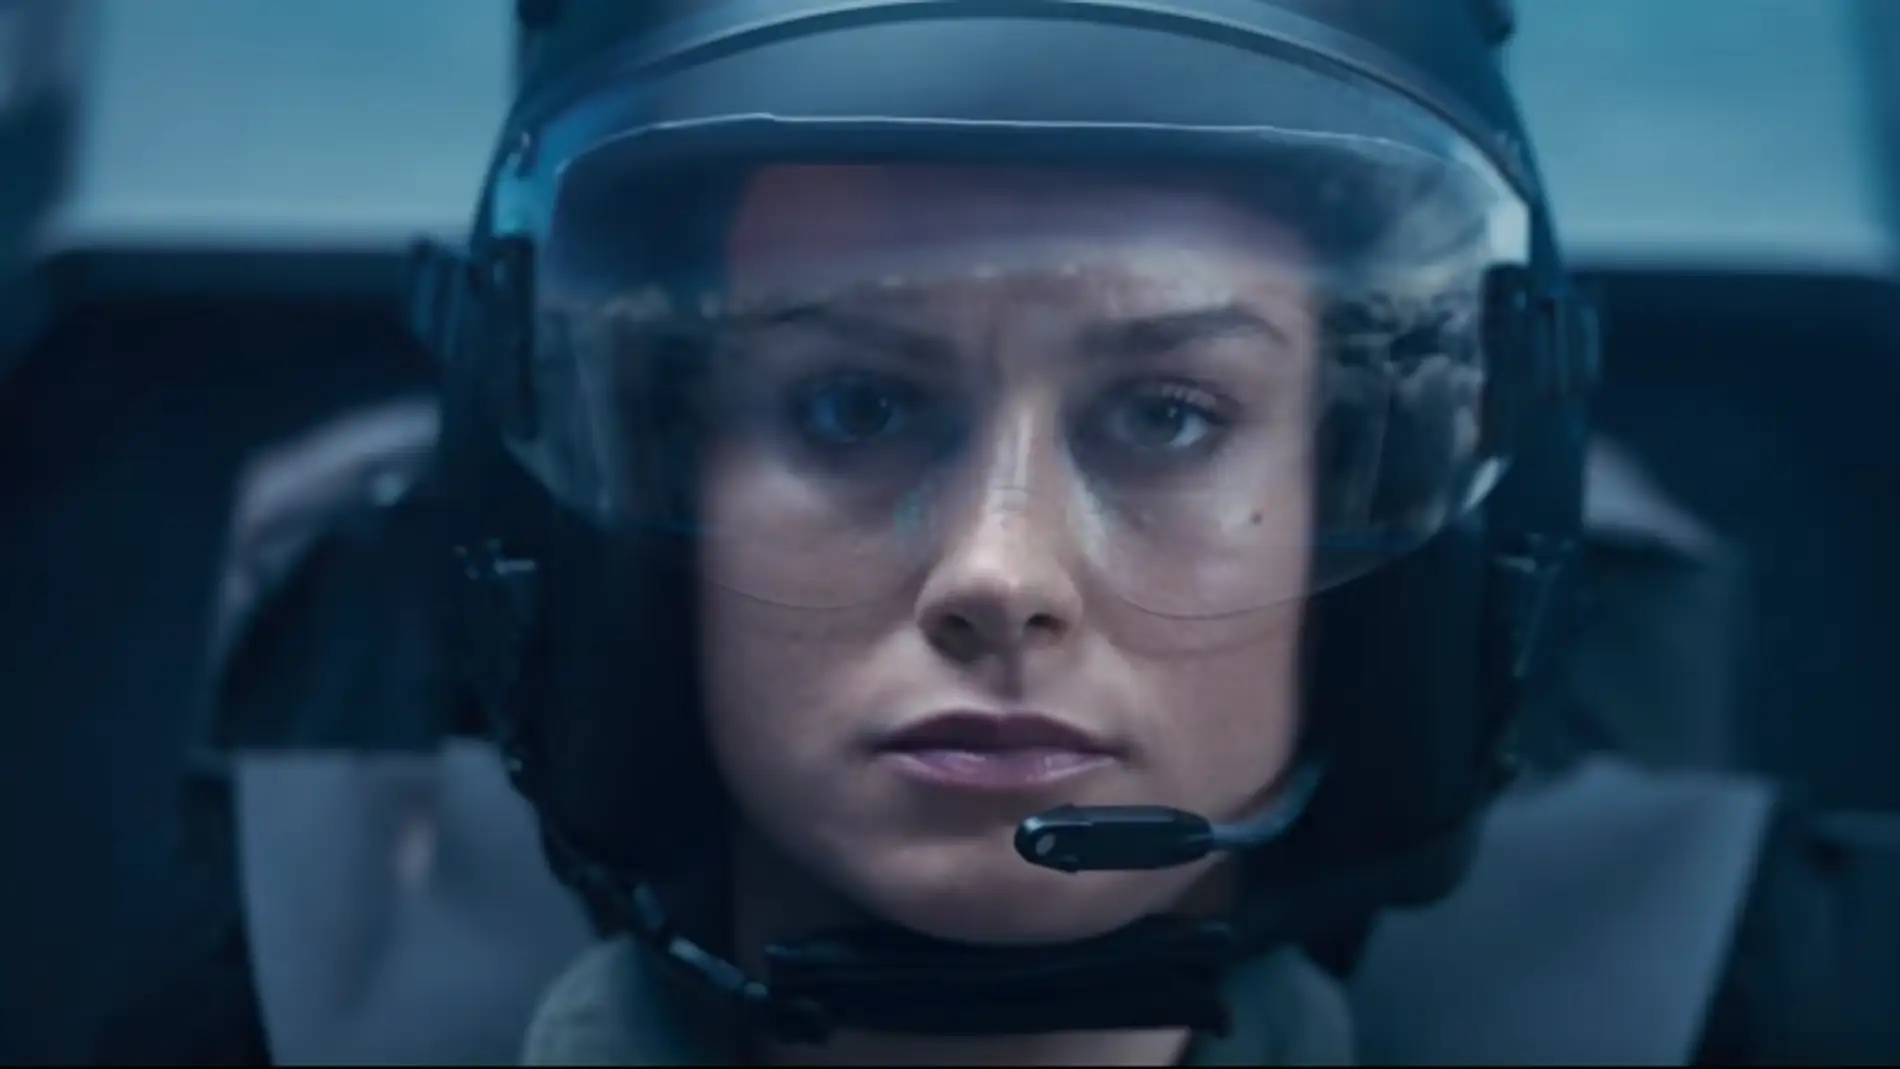 Brie Larson en 'Capitana Marvel'